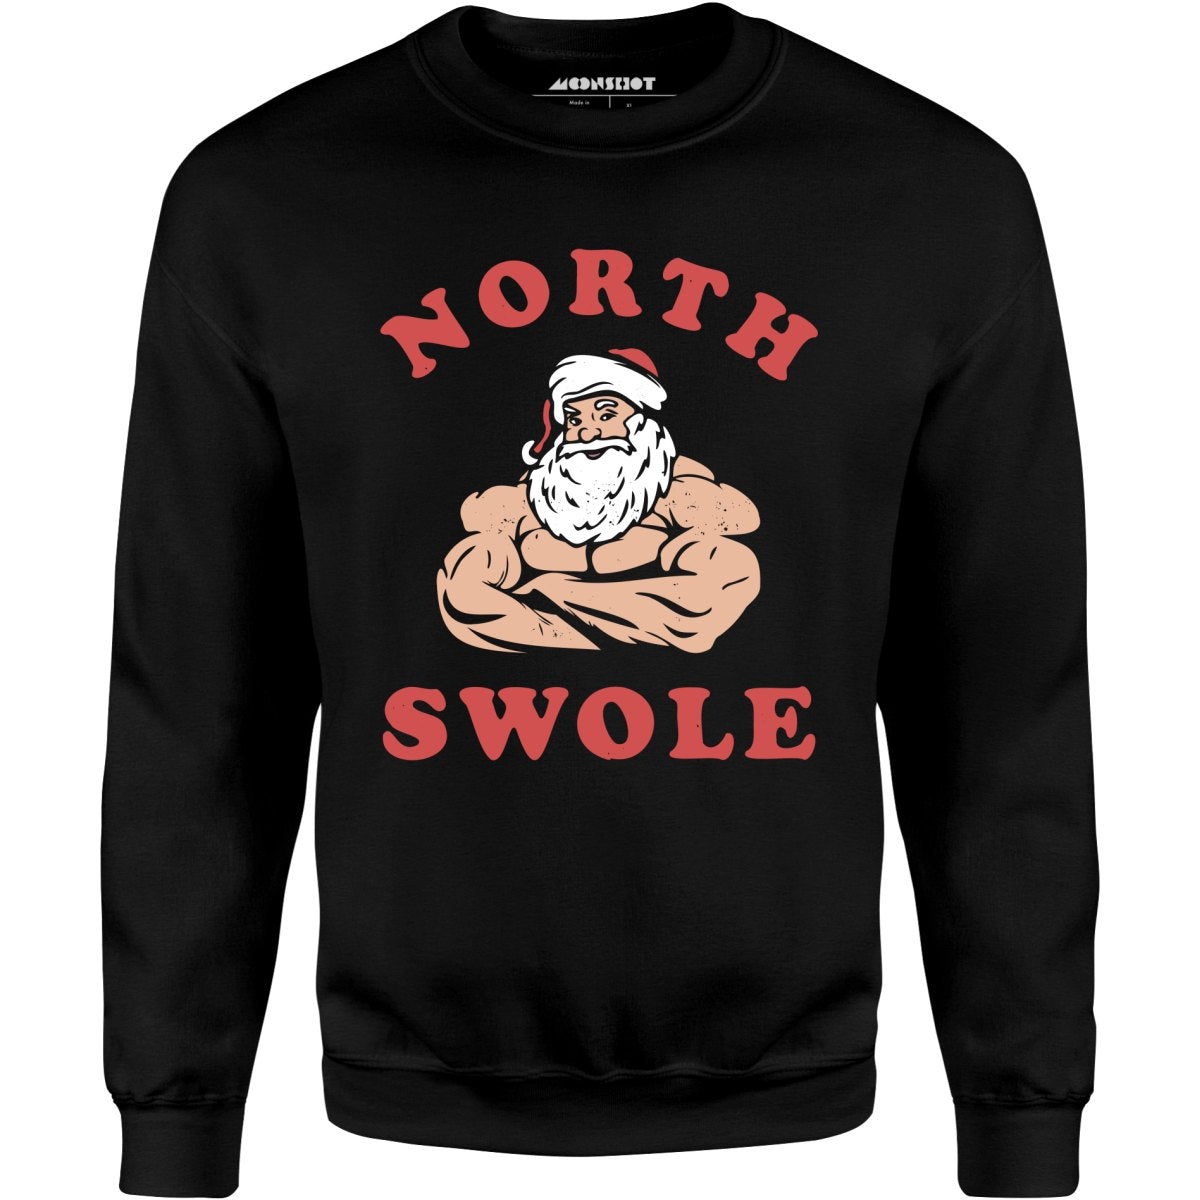 North Swole - Unisex Sweatshirt